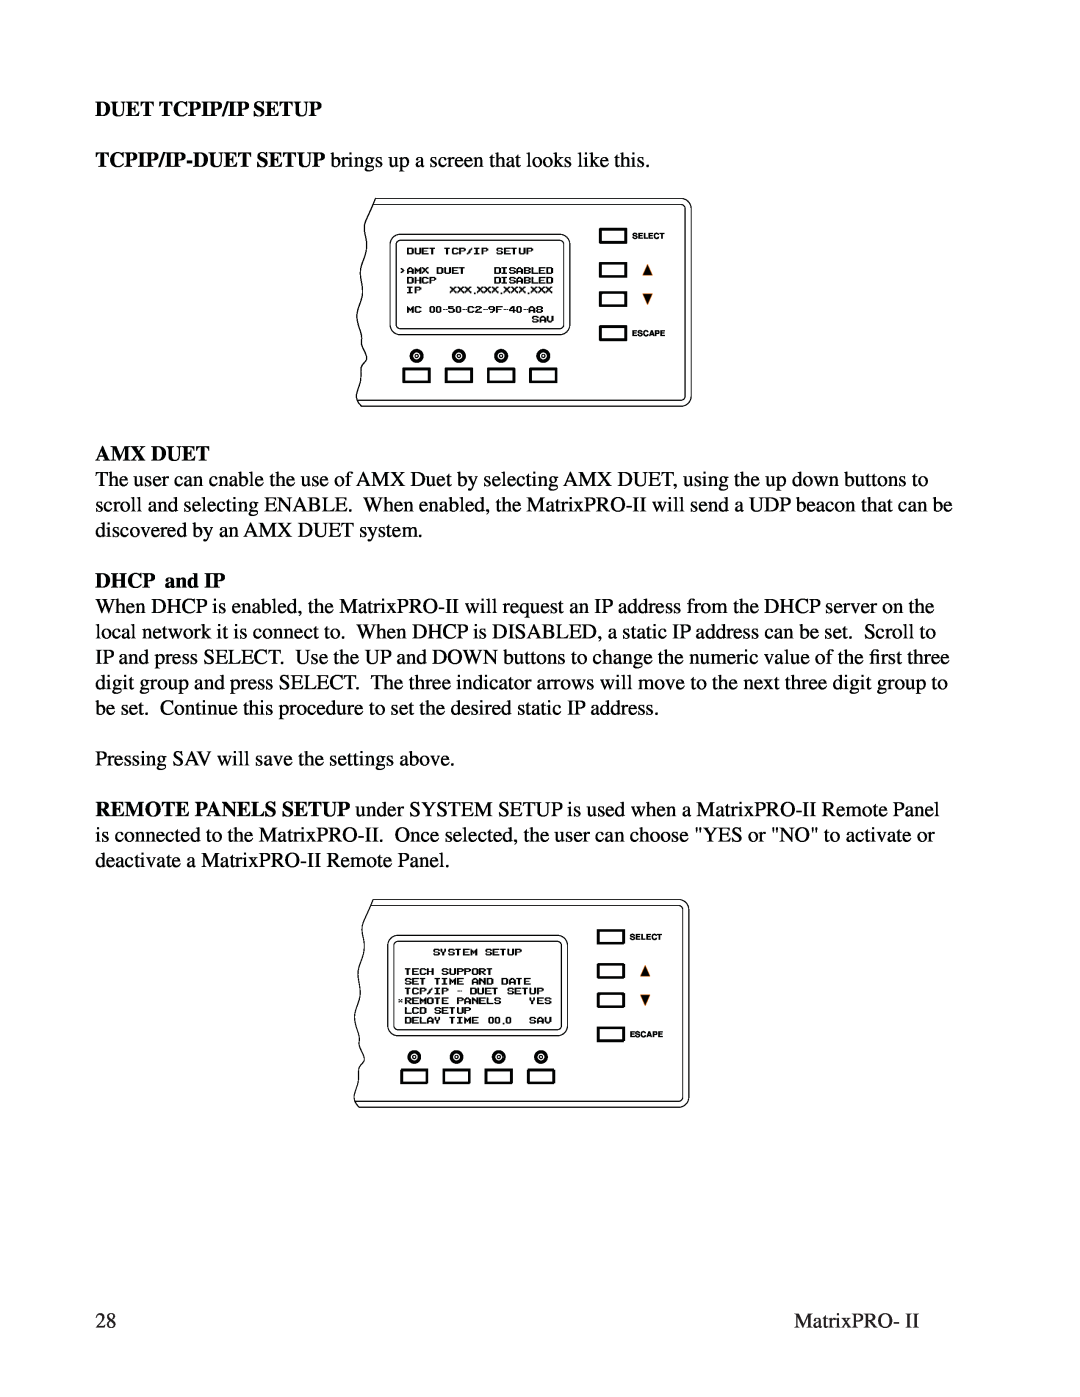 Barco 32X32, 12X8, matrixpro-II 12x8 manual Duet Tcpip/Ip Setup, Amx Duet, DHCP and IP 